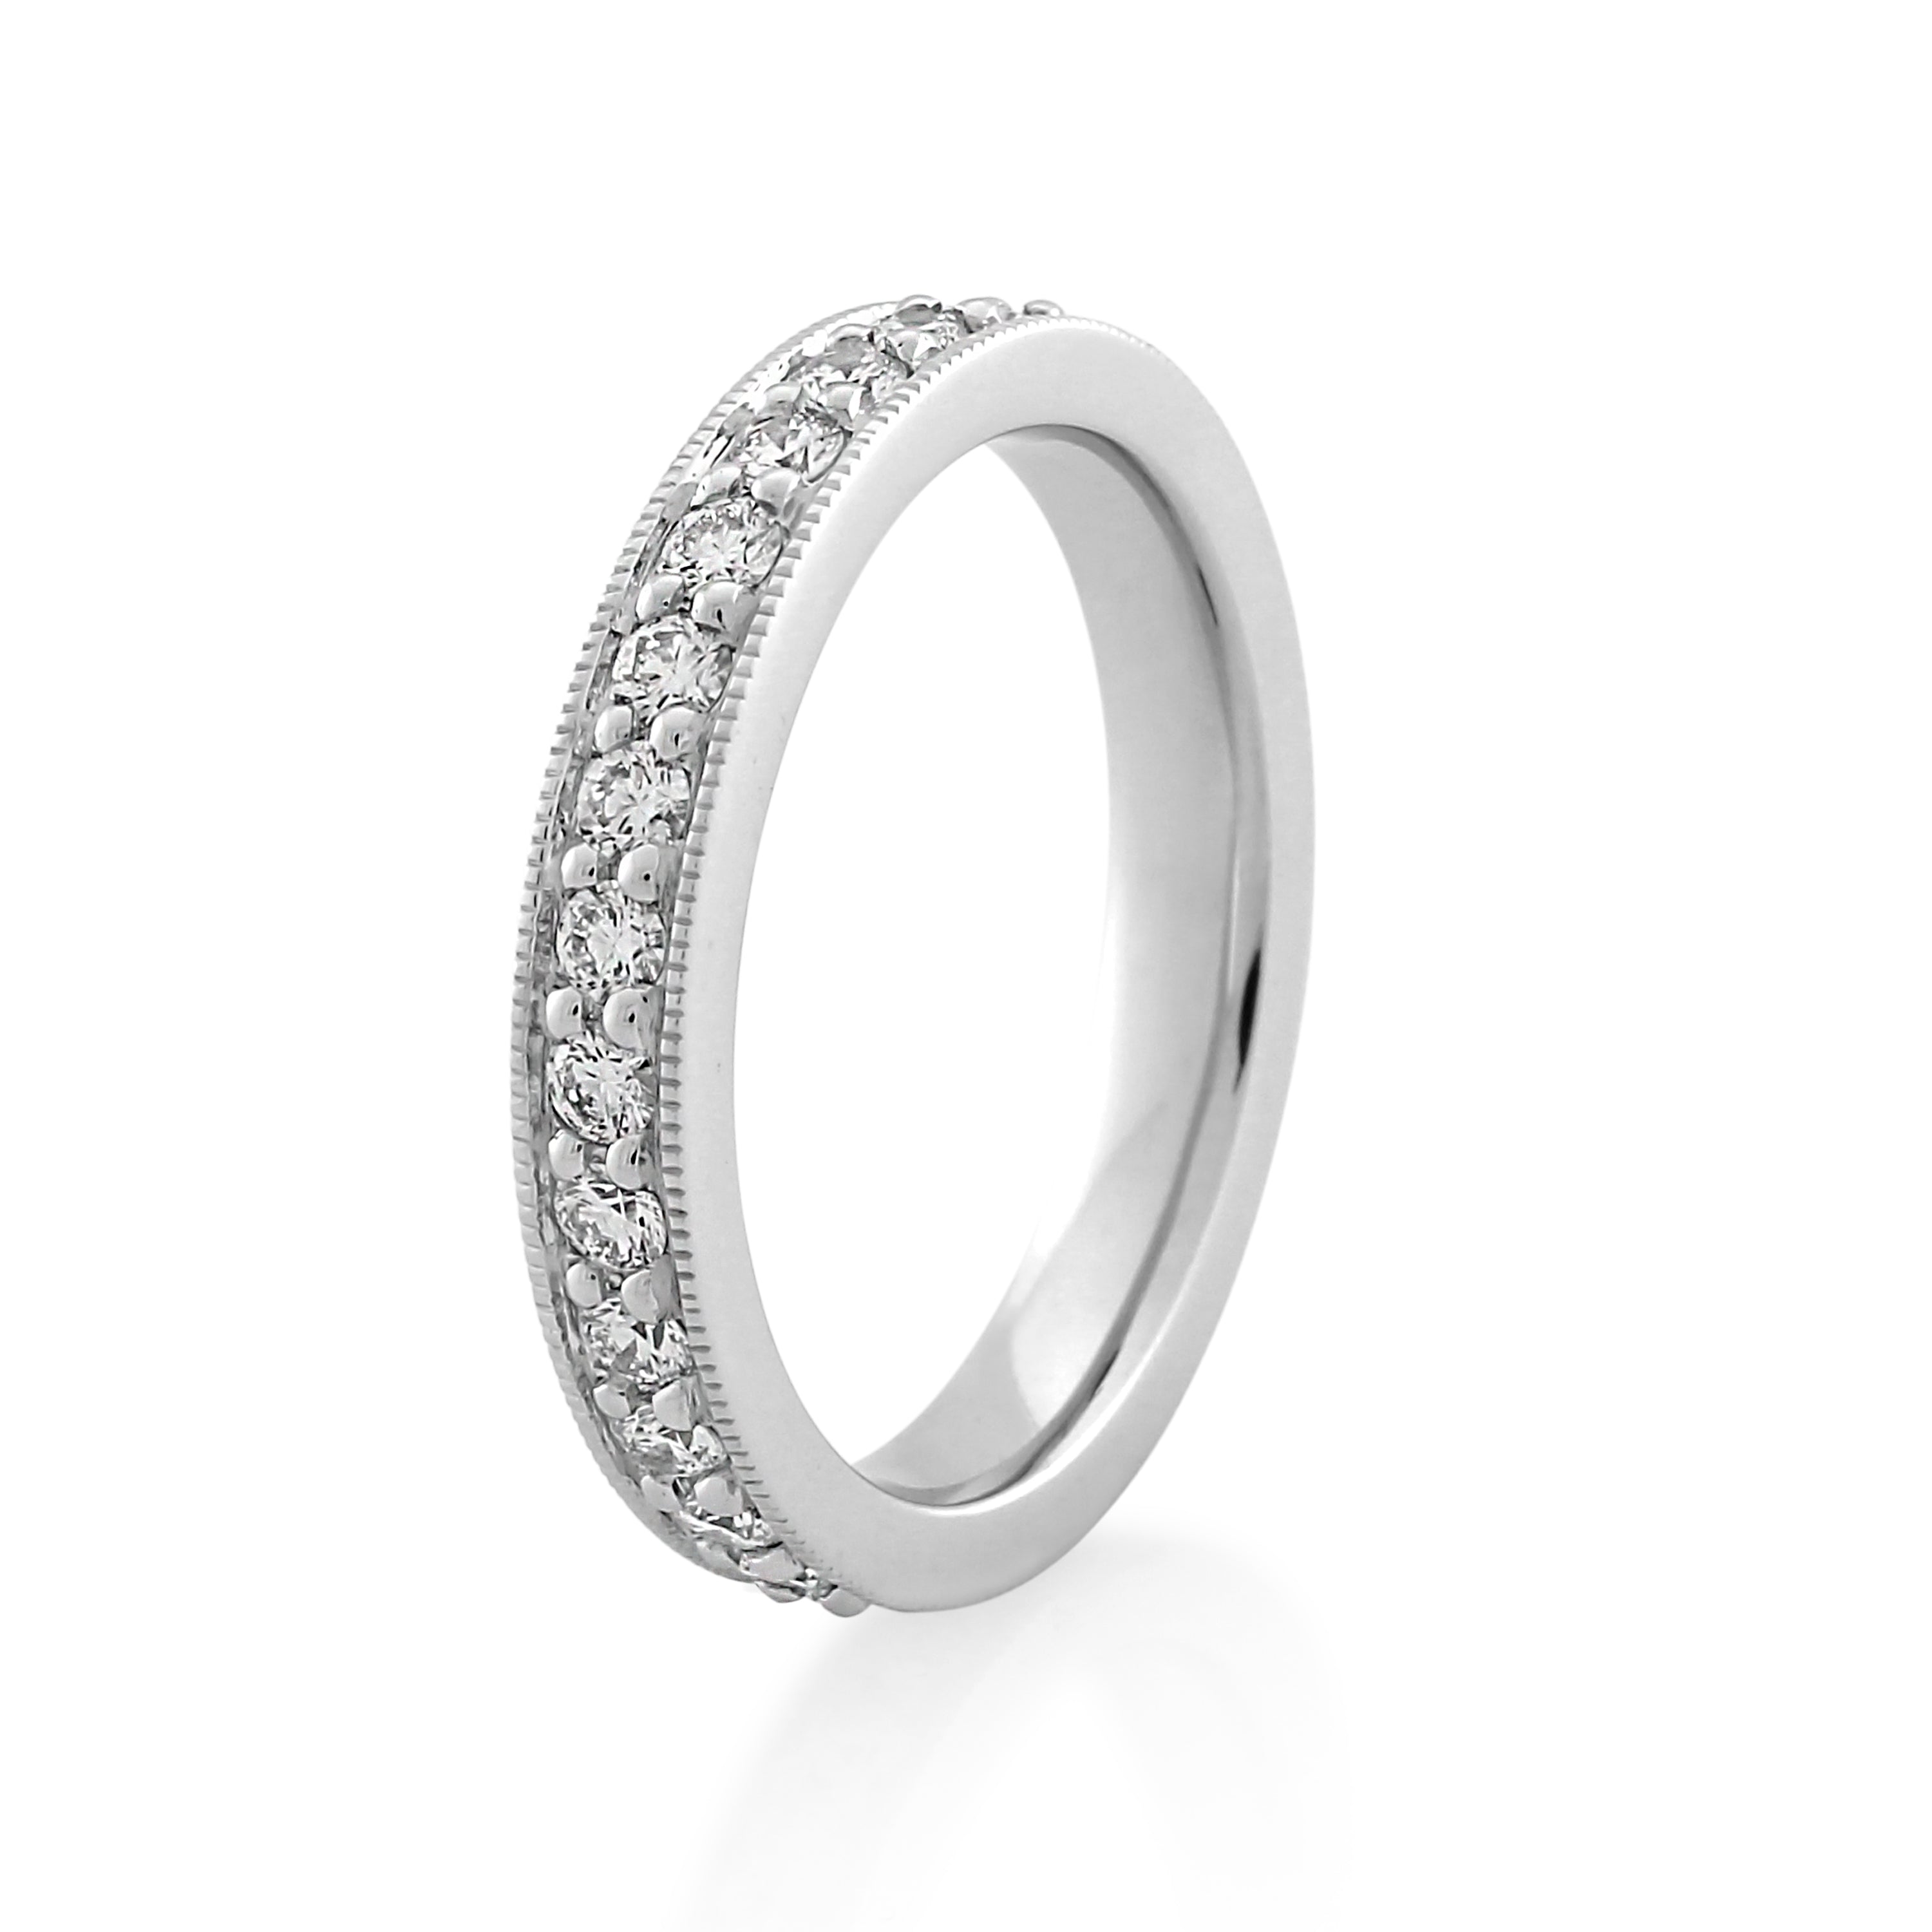 18ct White Gold Diamond Wedding Ring .87ct TW